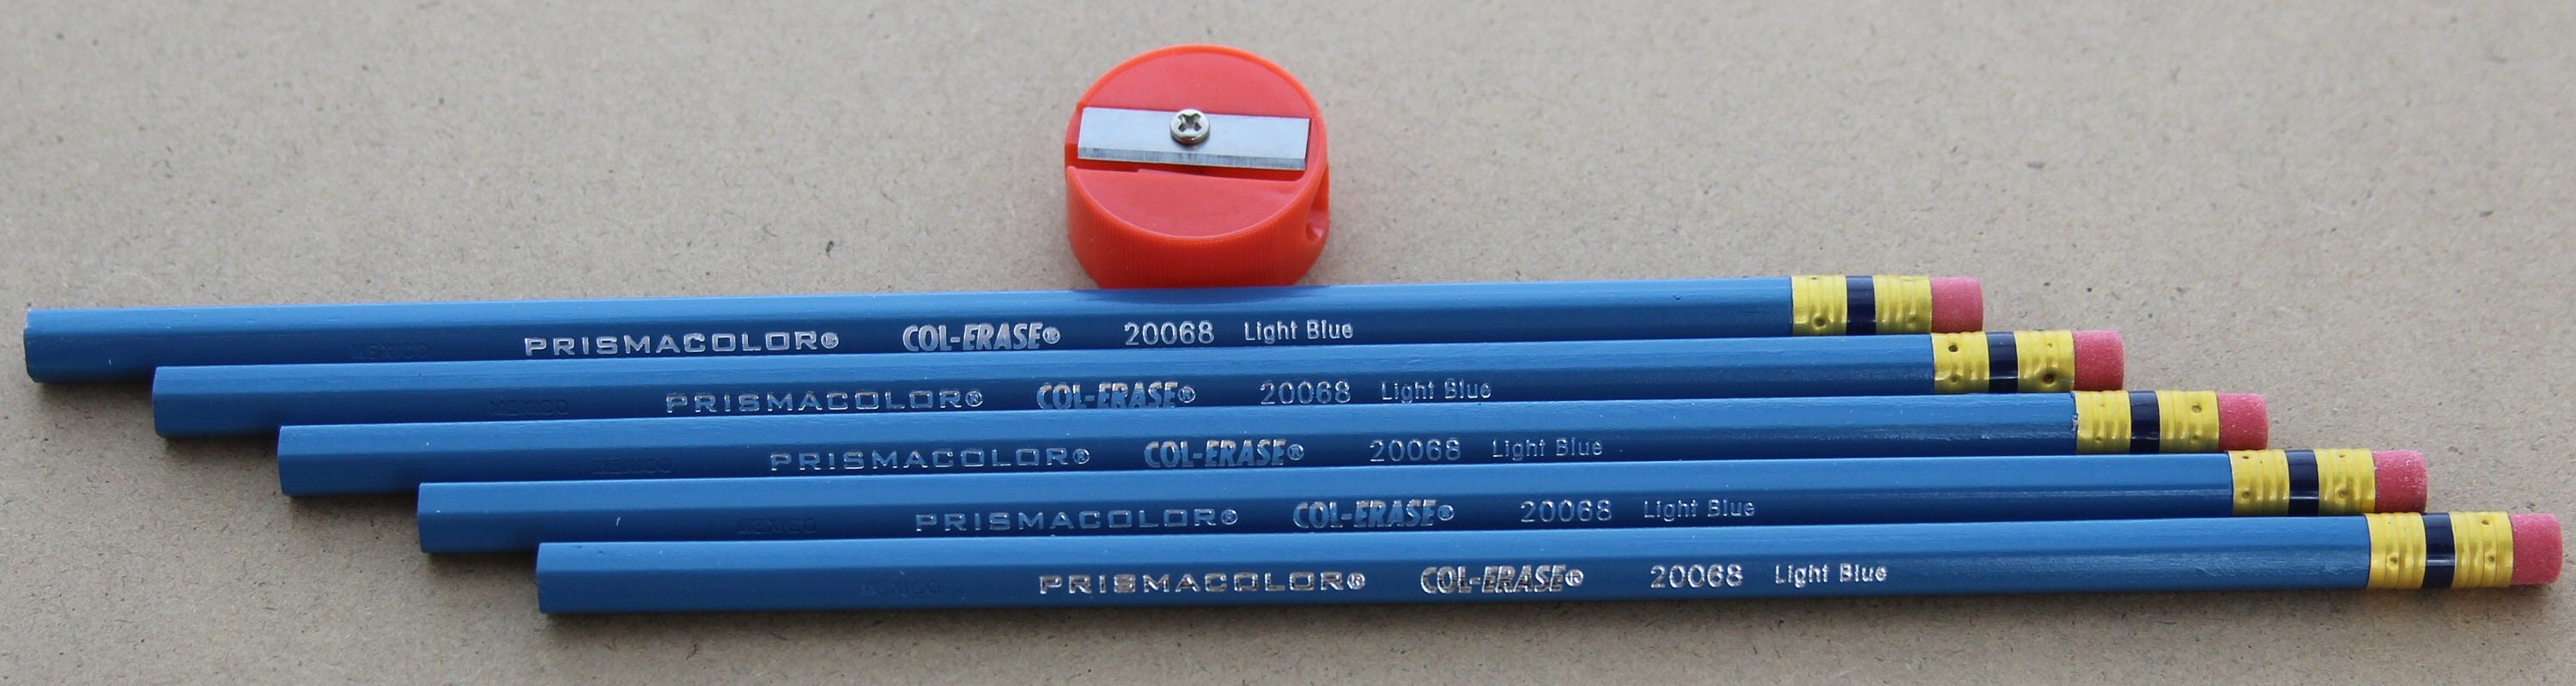 Swatch Form: Shuttle Art Professional Pencils 180pc. 